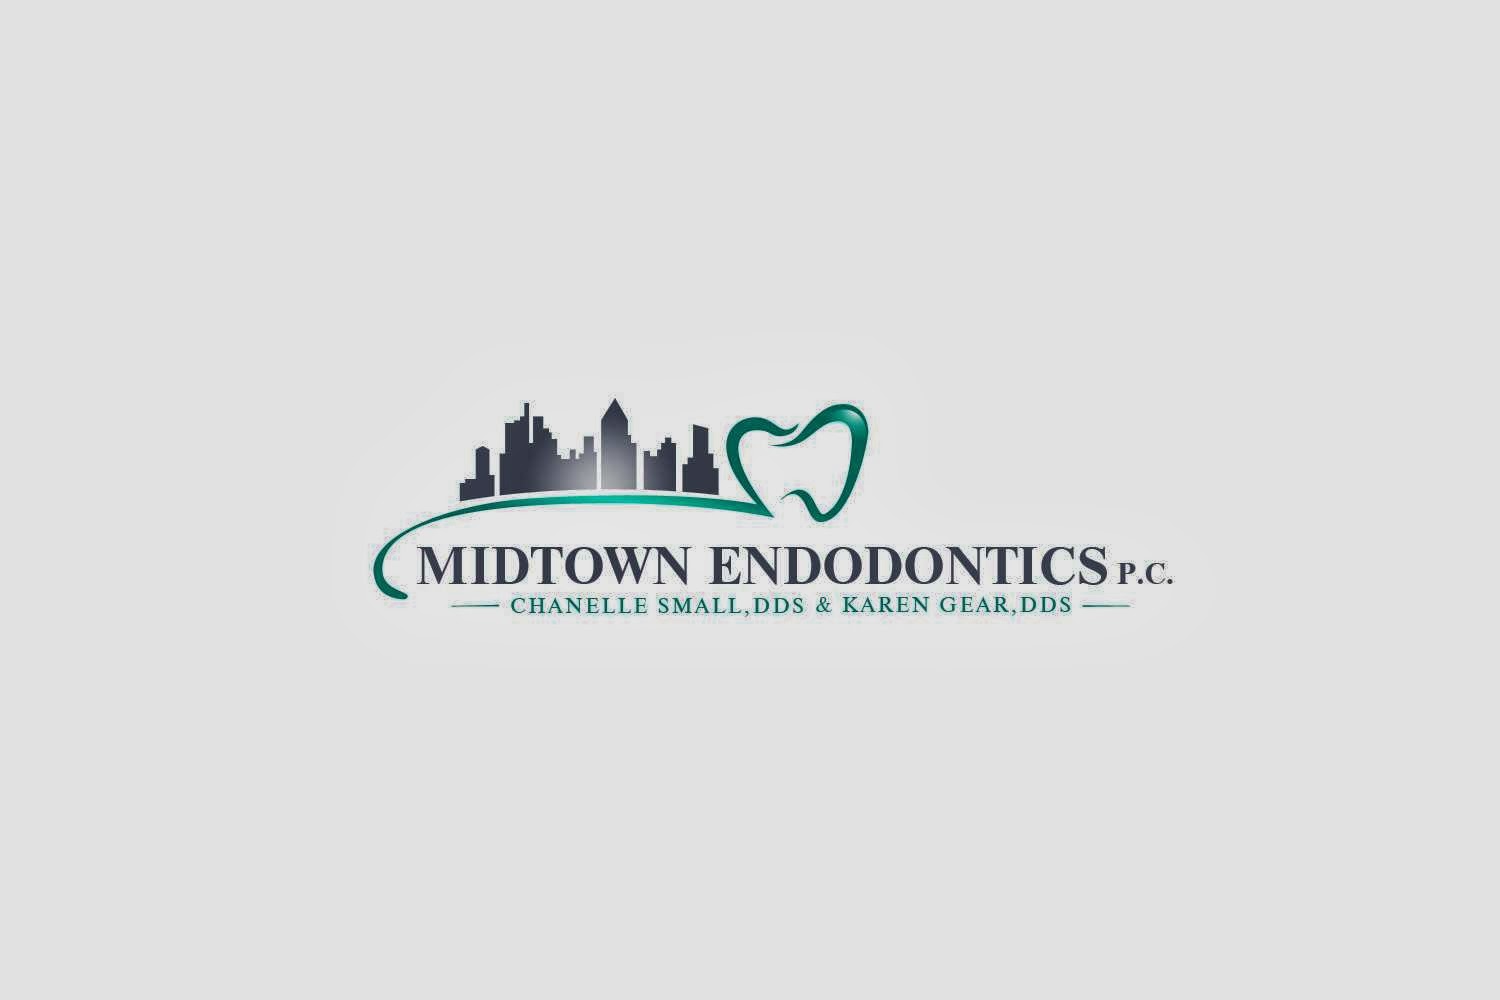 Photo of Midtown Endodontics P.C. in New York City, New York, United States - 1 Picture of Point of interest, Establishment, Health, Dentist